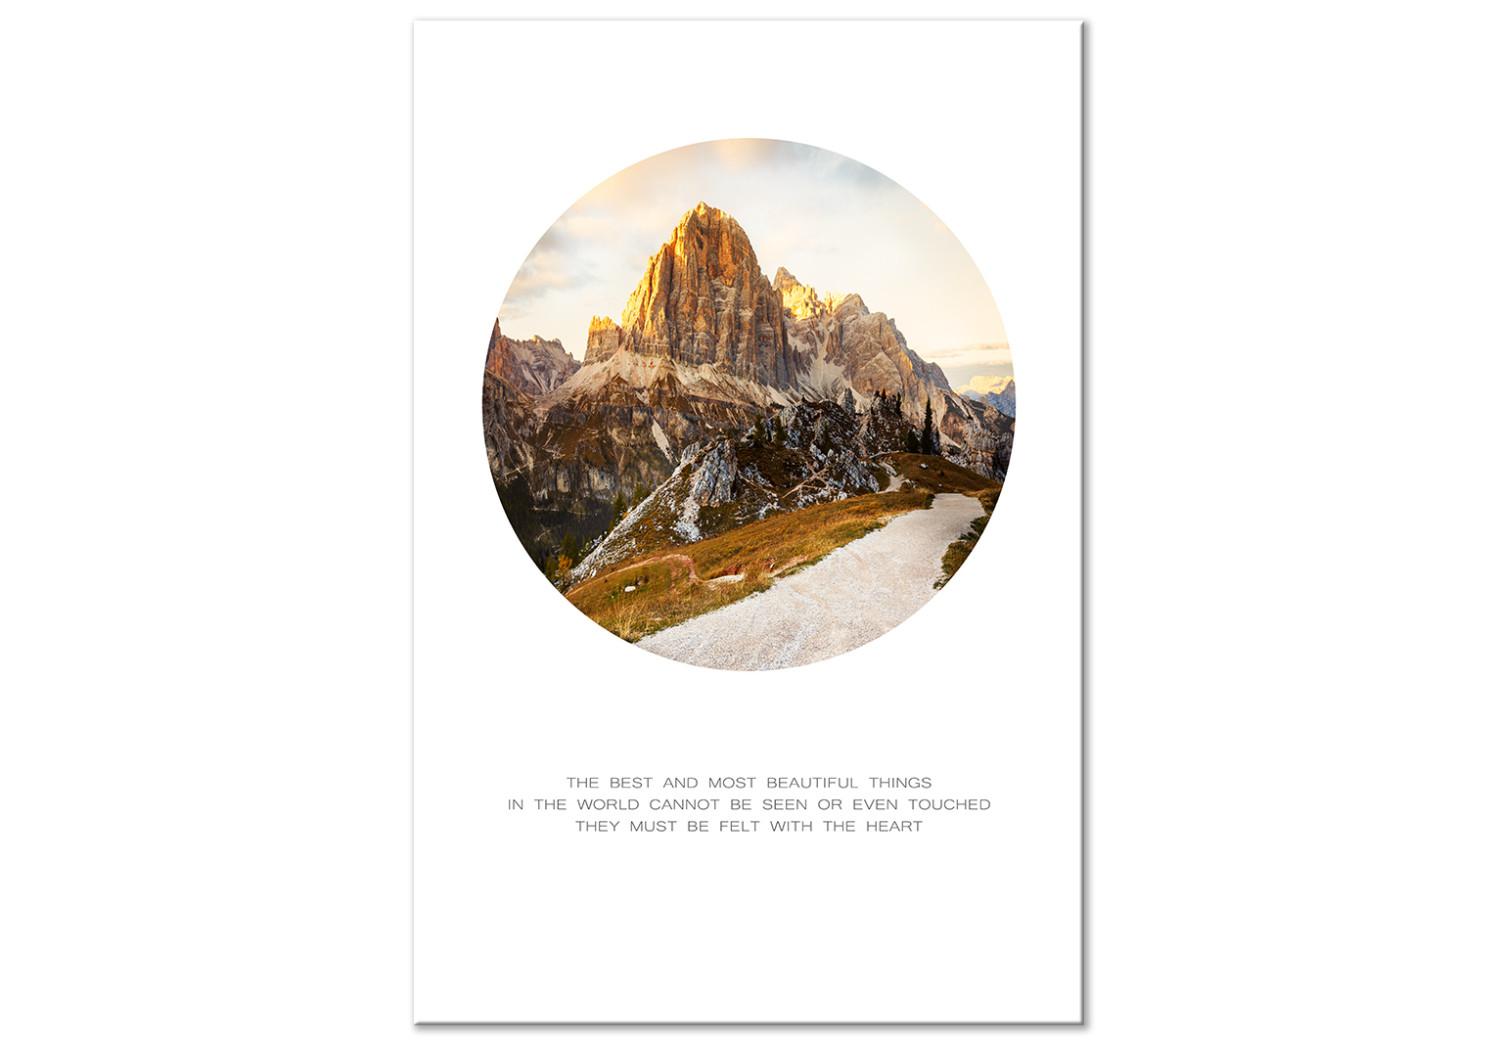 Cuadro moderno Alma de explorador - foto de picos alpinos con frase, fondo blanco